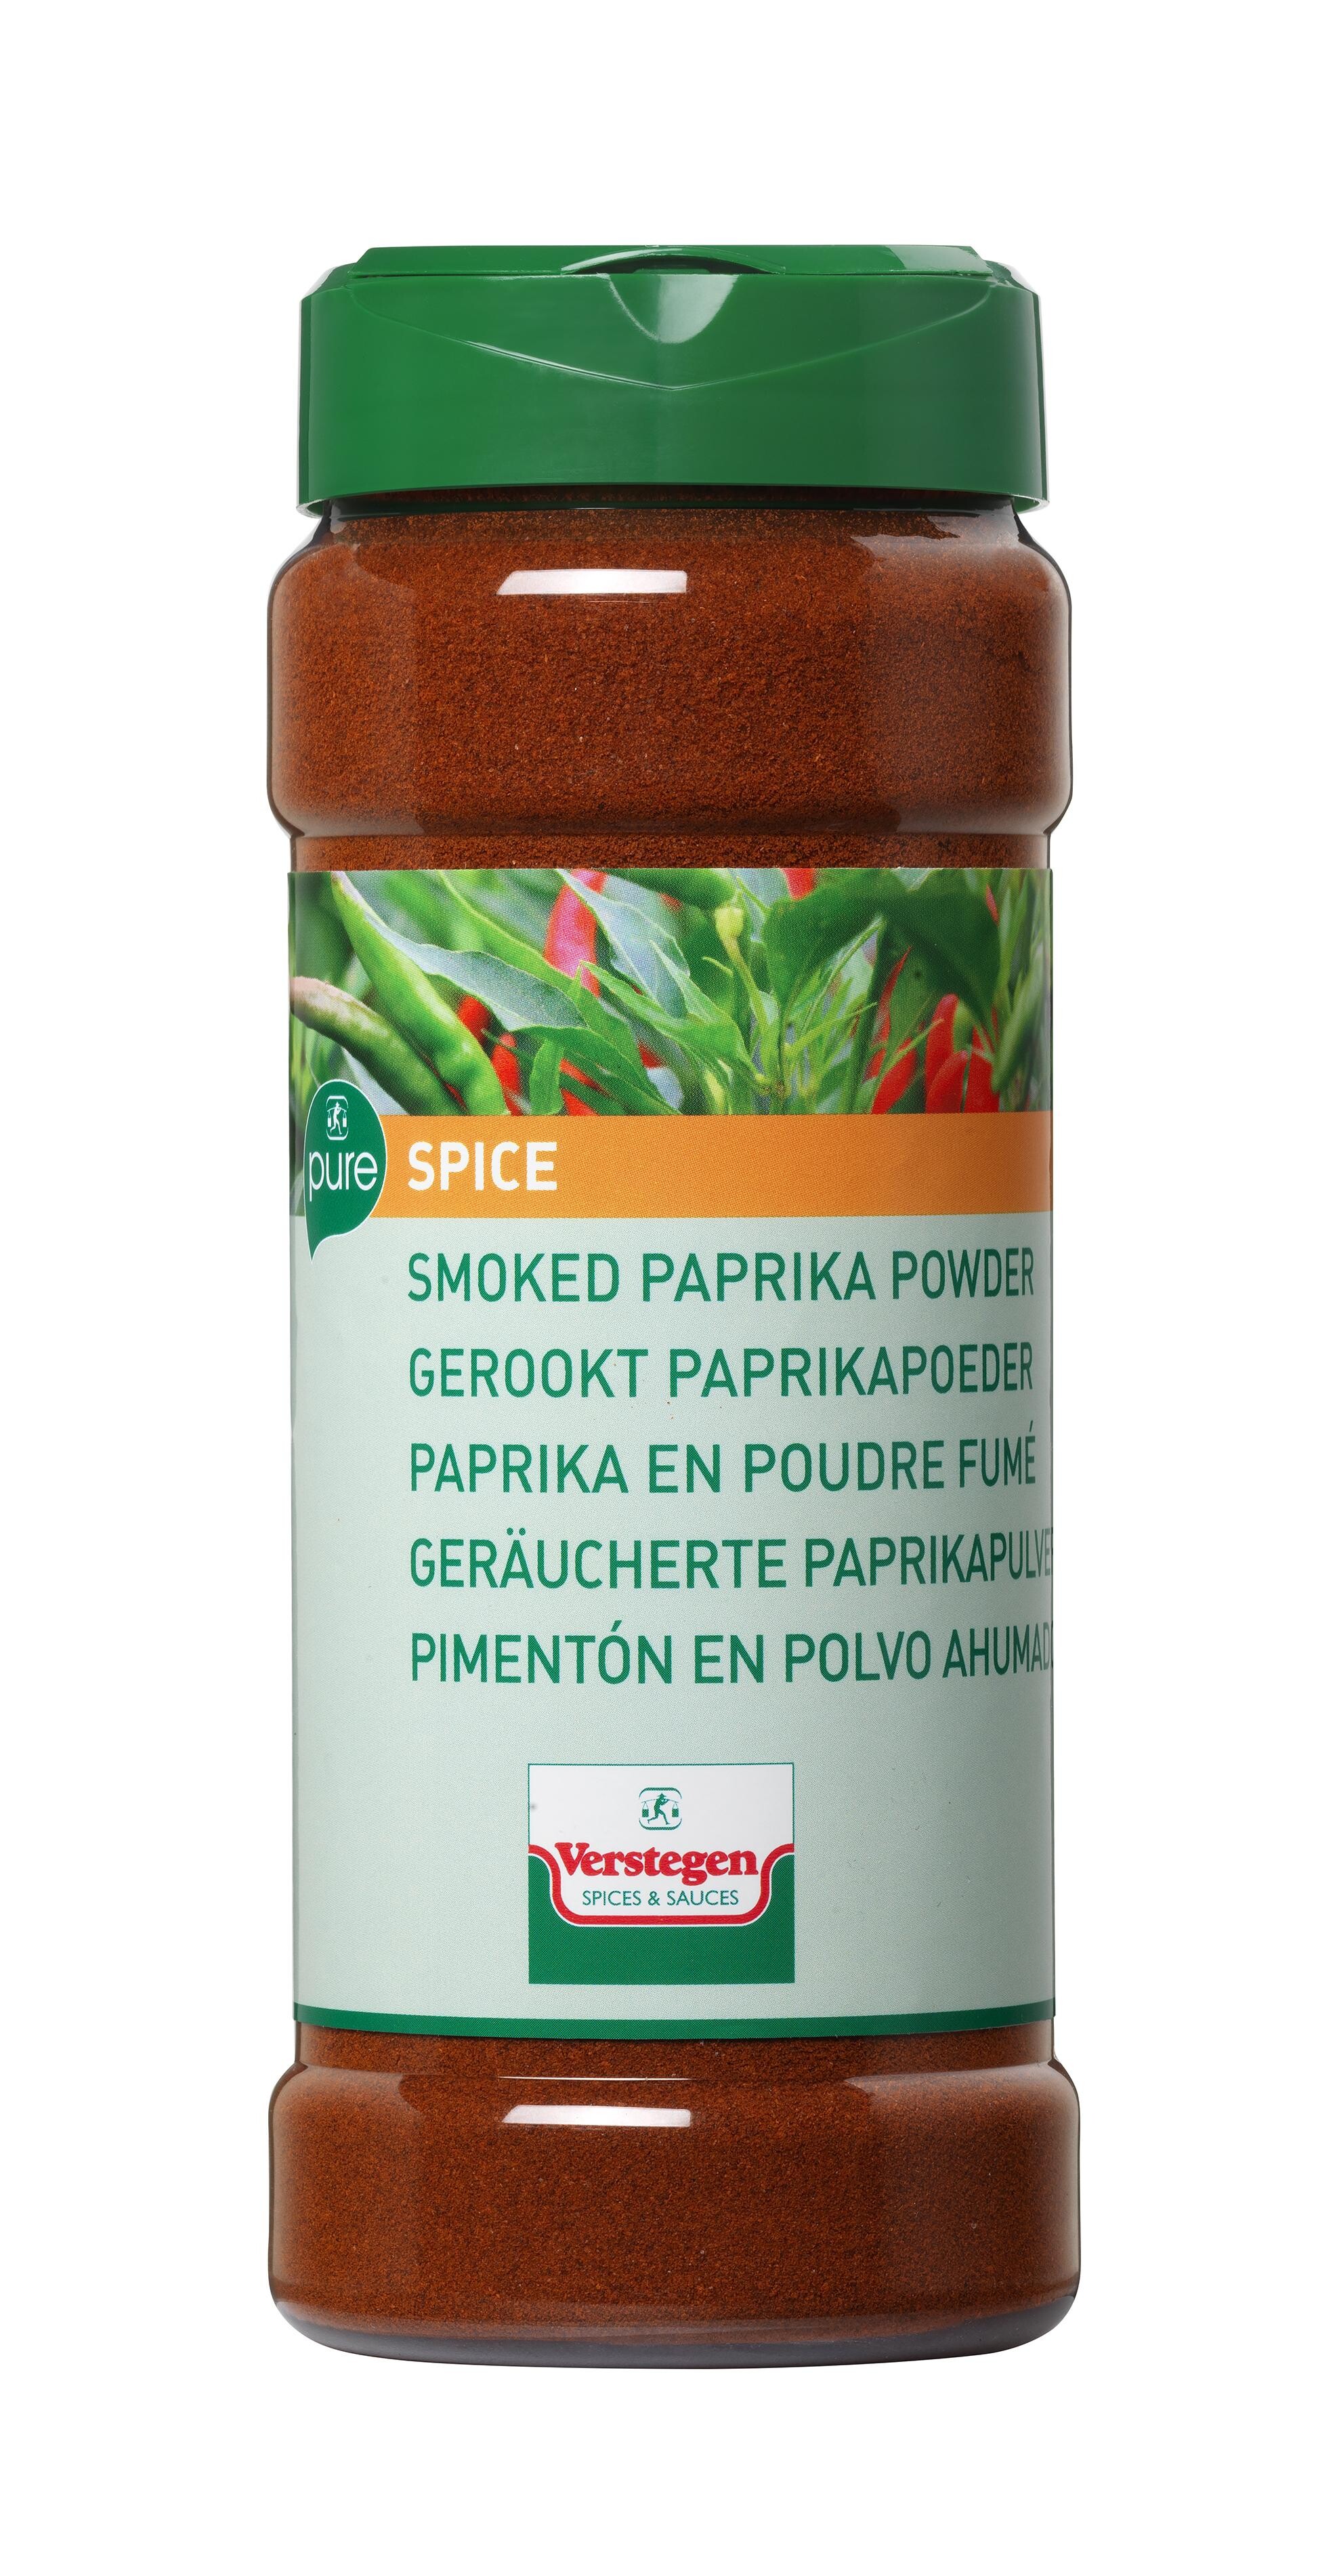 Verstegen Smoked Paprika powder 240gr PET Jar